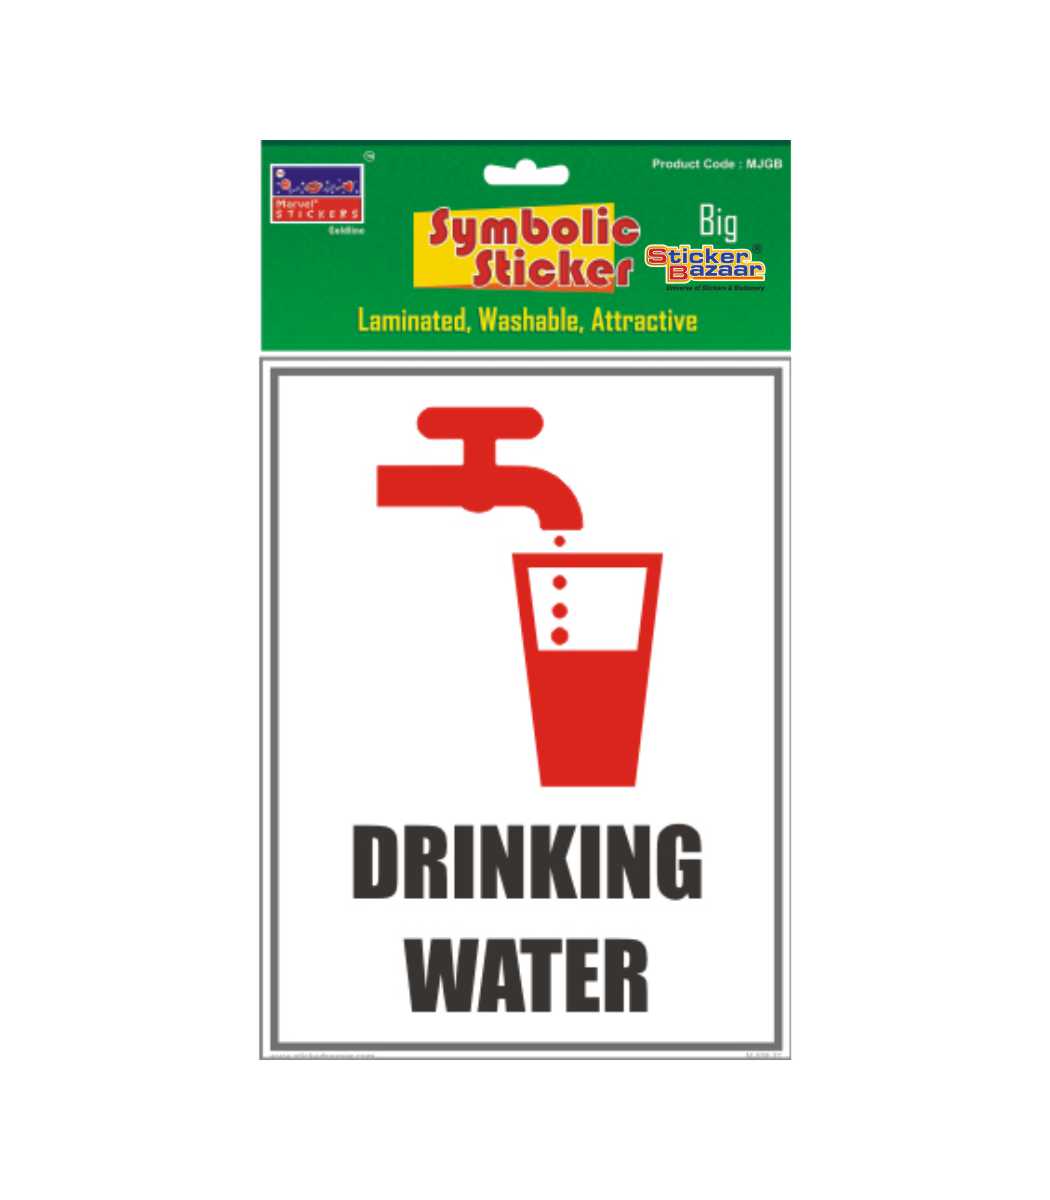 Drinking Water Big Symbolic Sticker